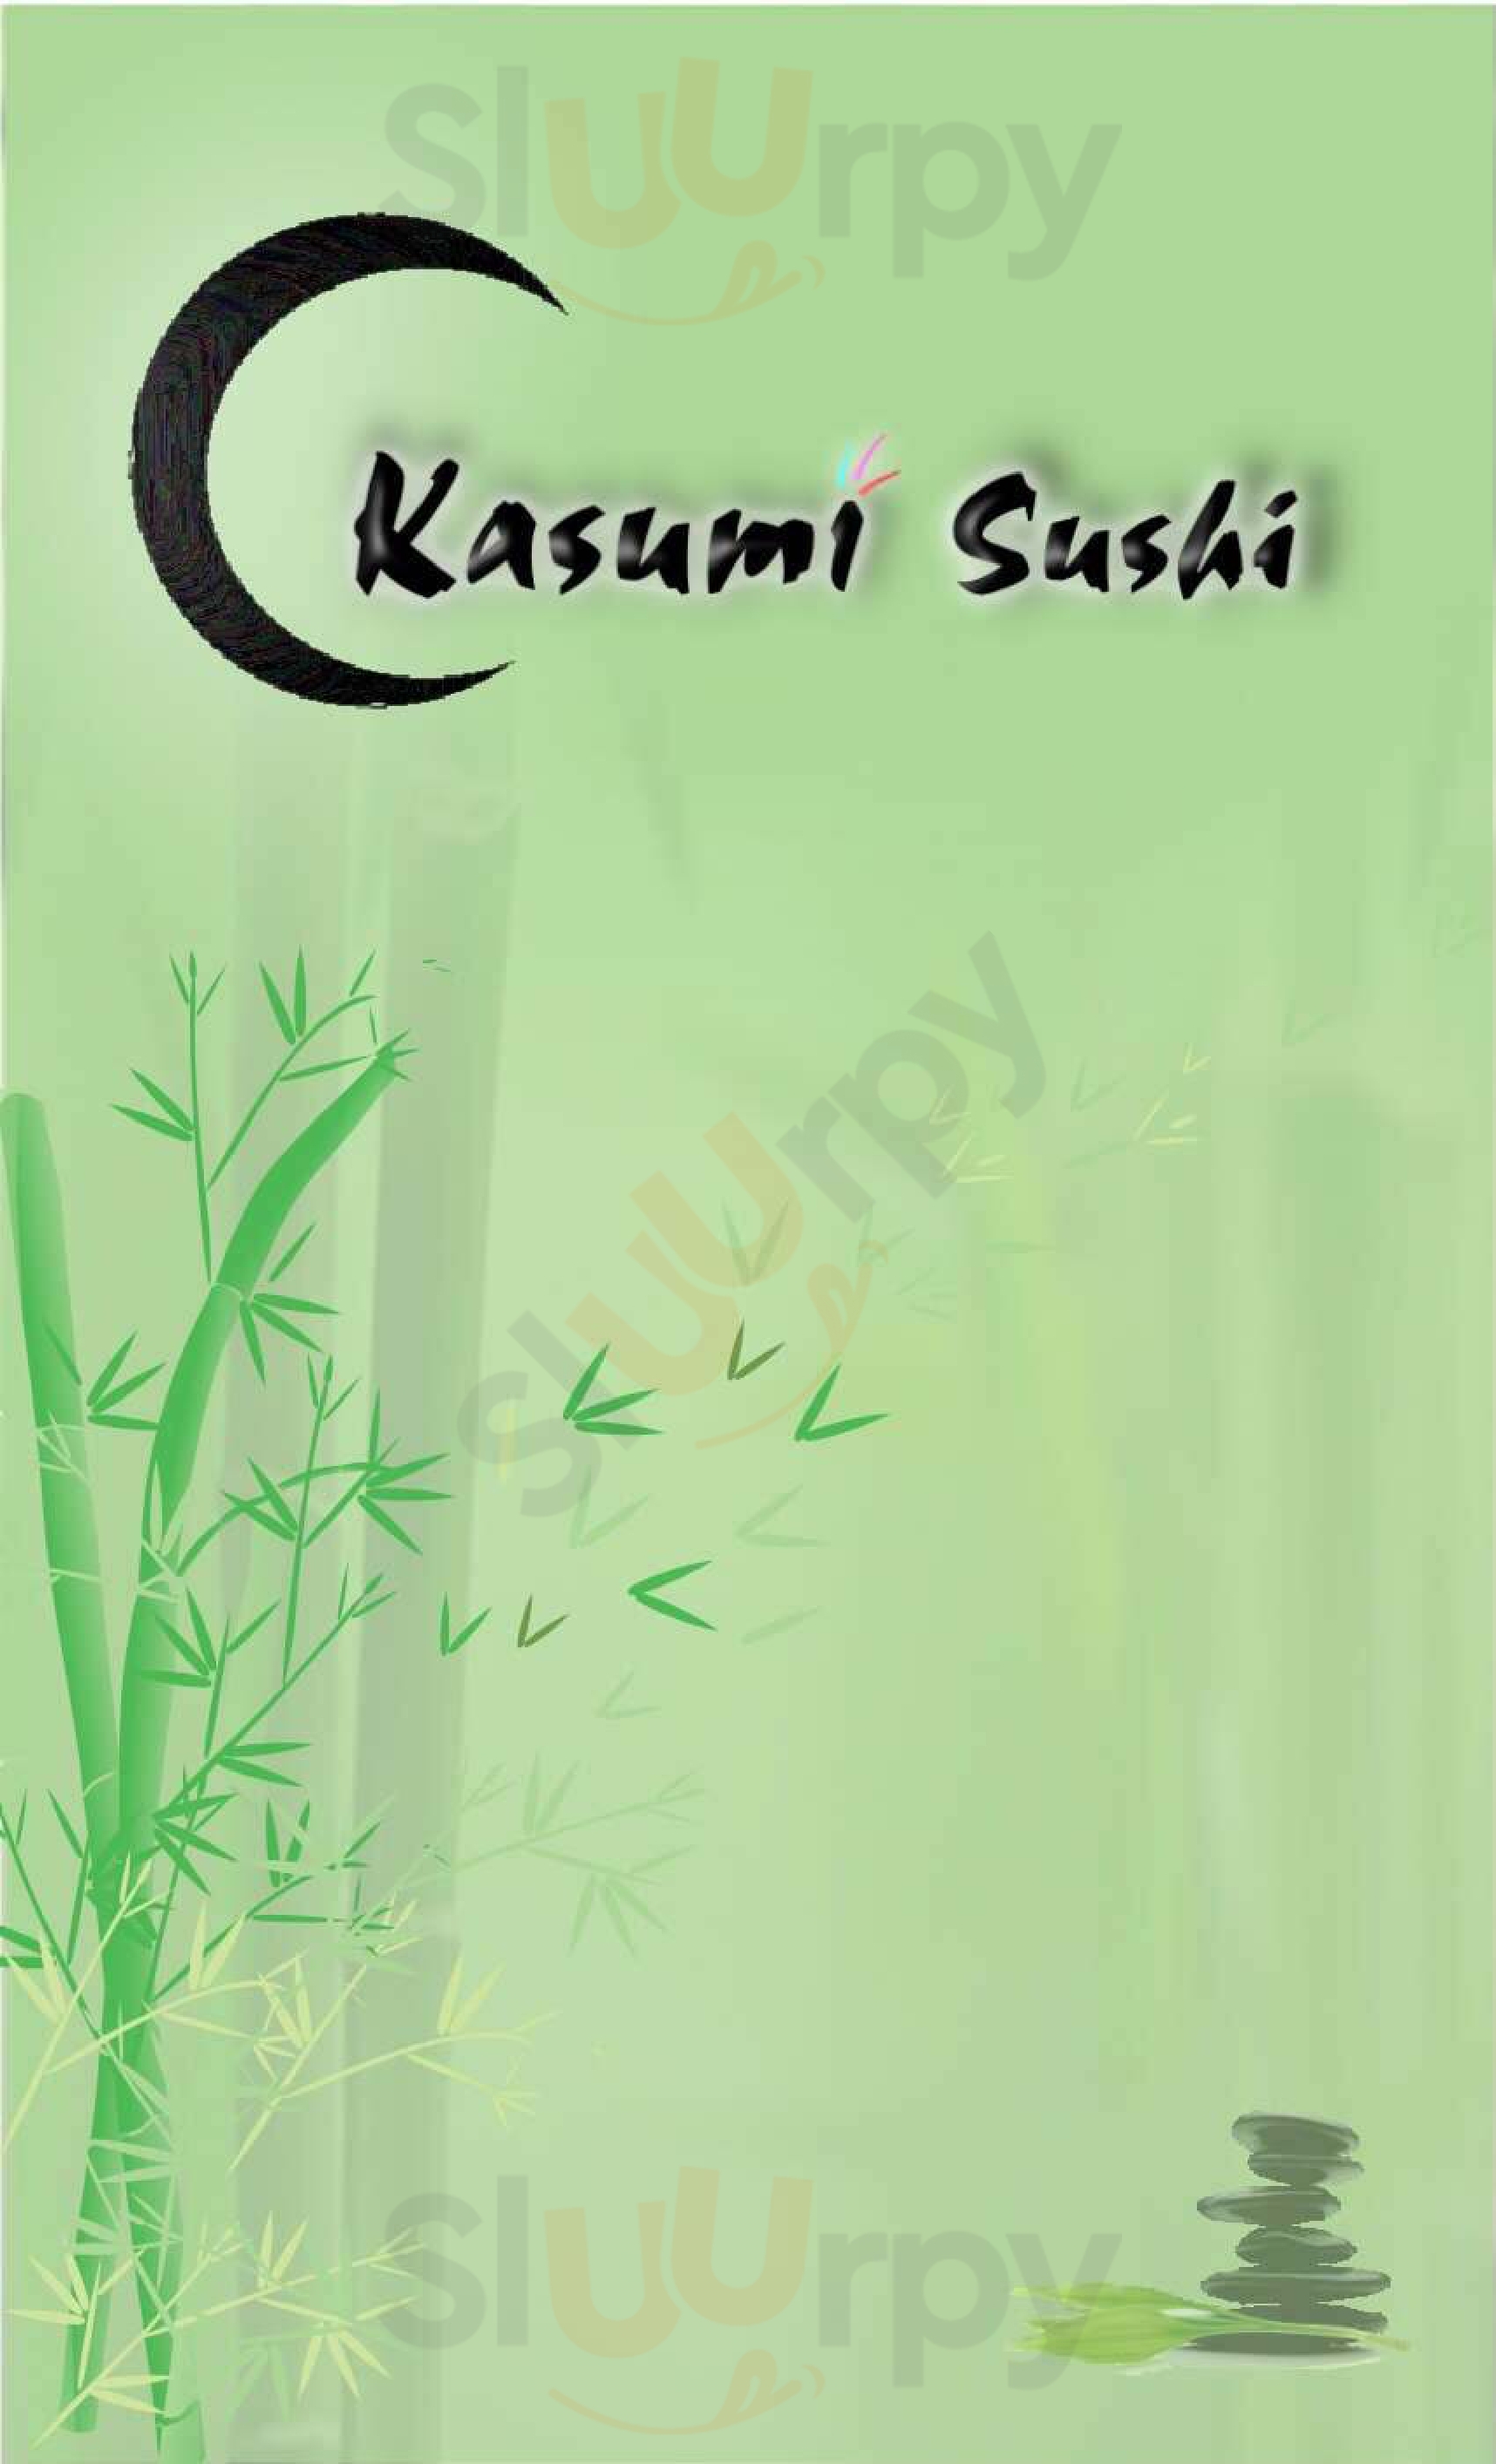 Kasumi Sushi Vancouver Island Menu - 1